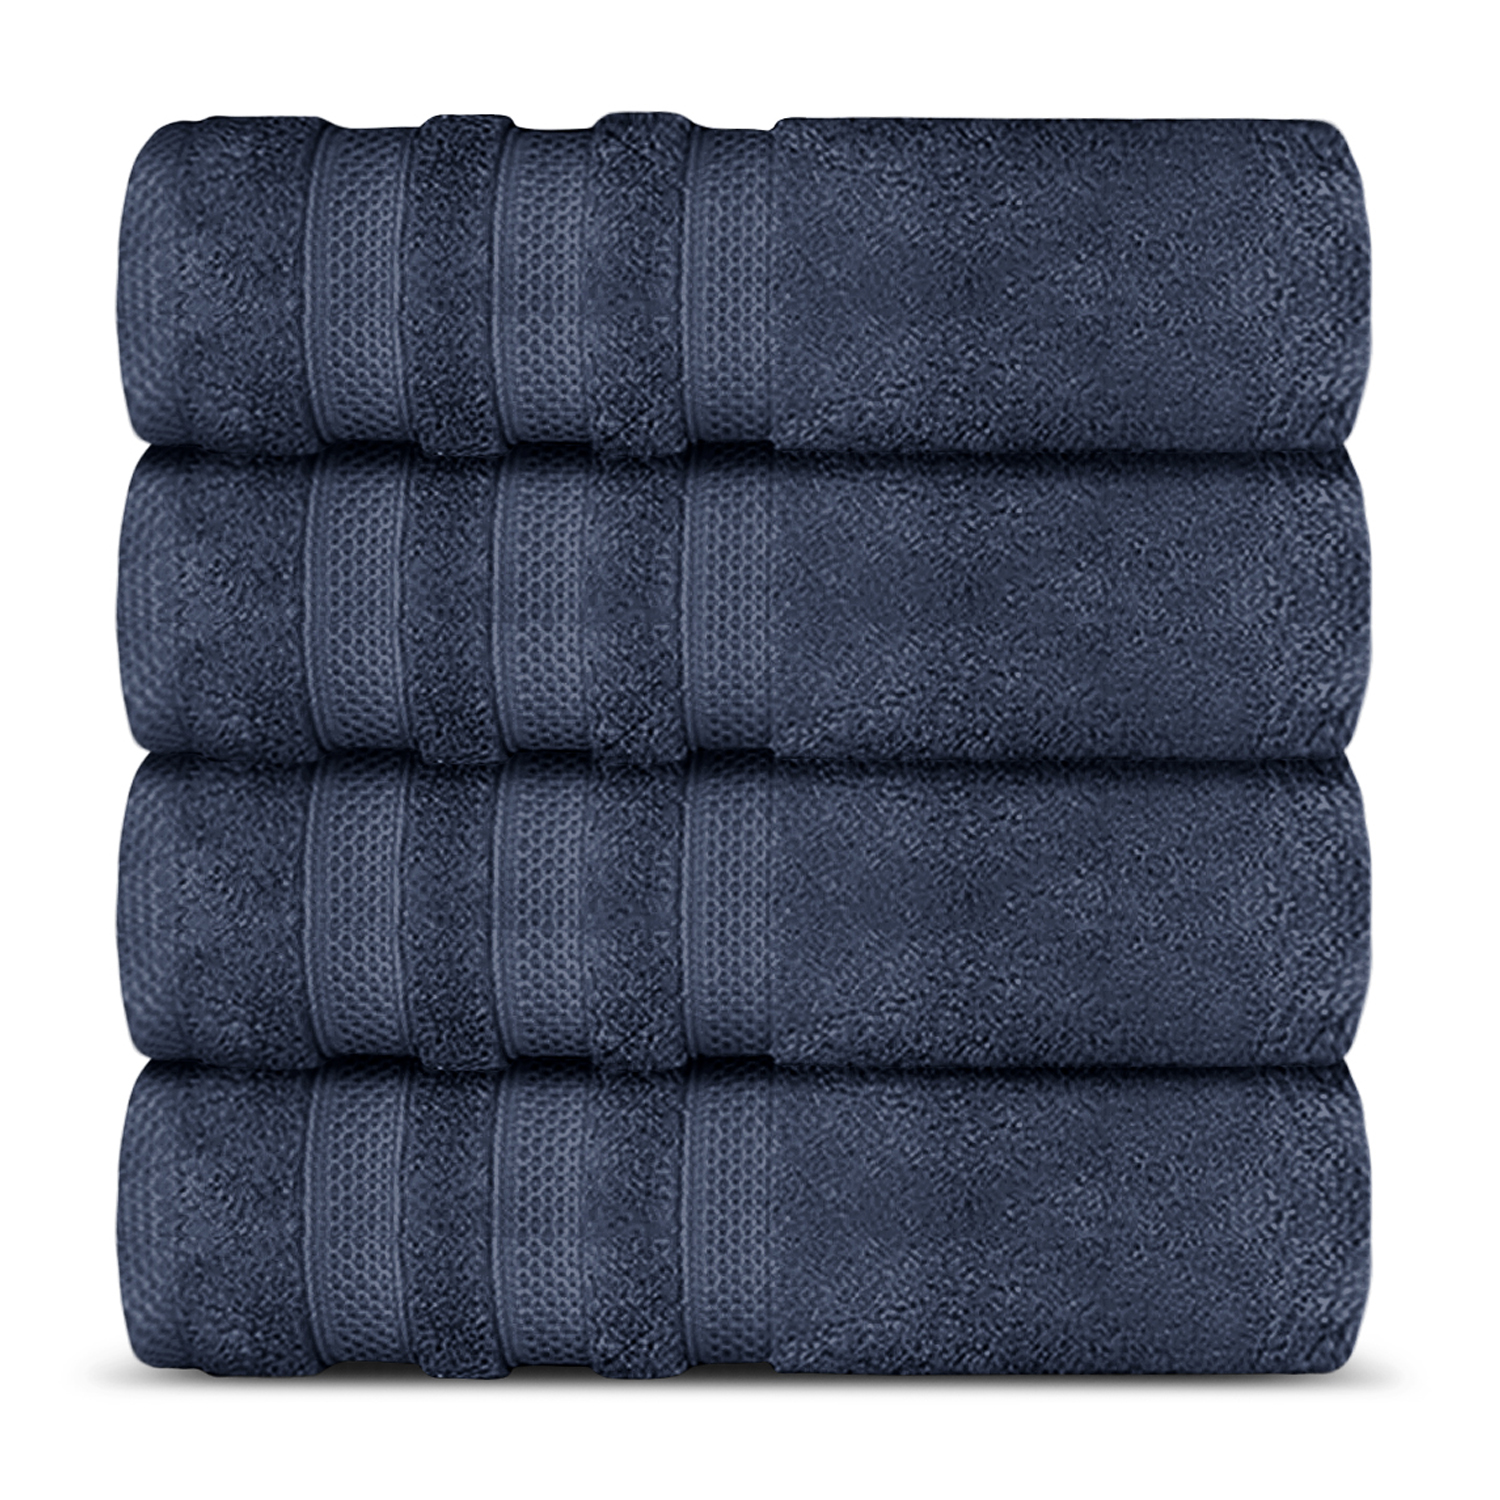 Lavish Home 12-piece Cotton Towel Set, Navy : Target